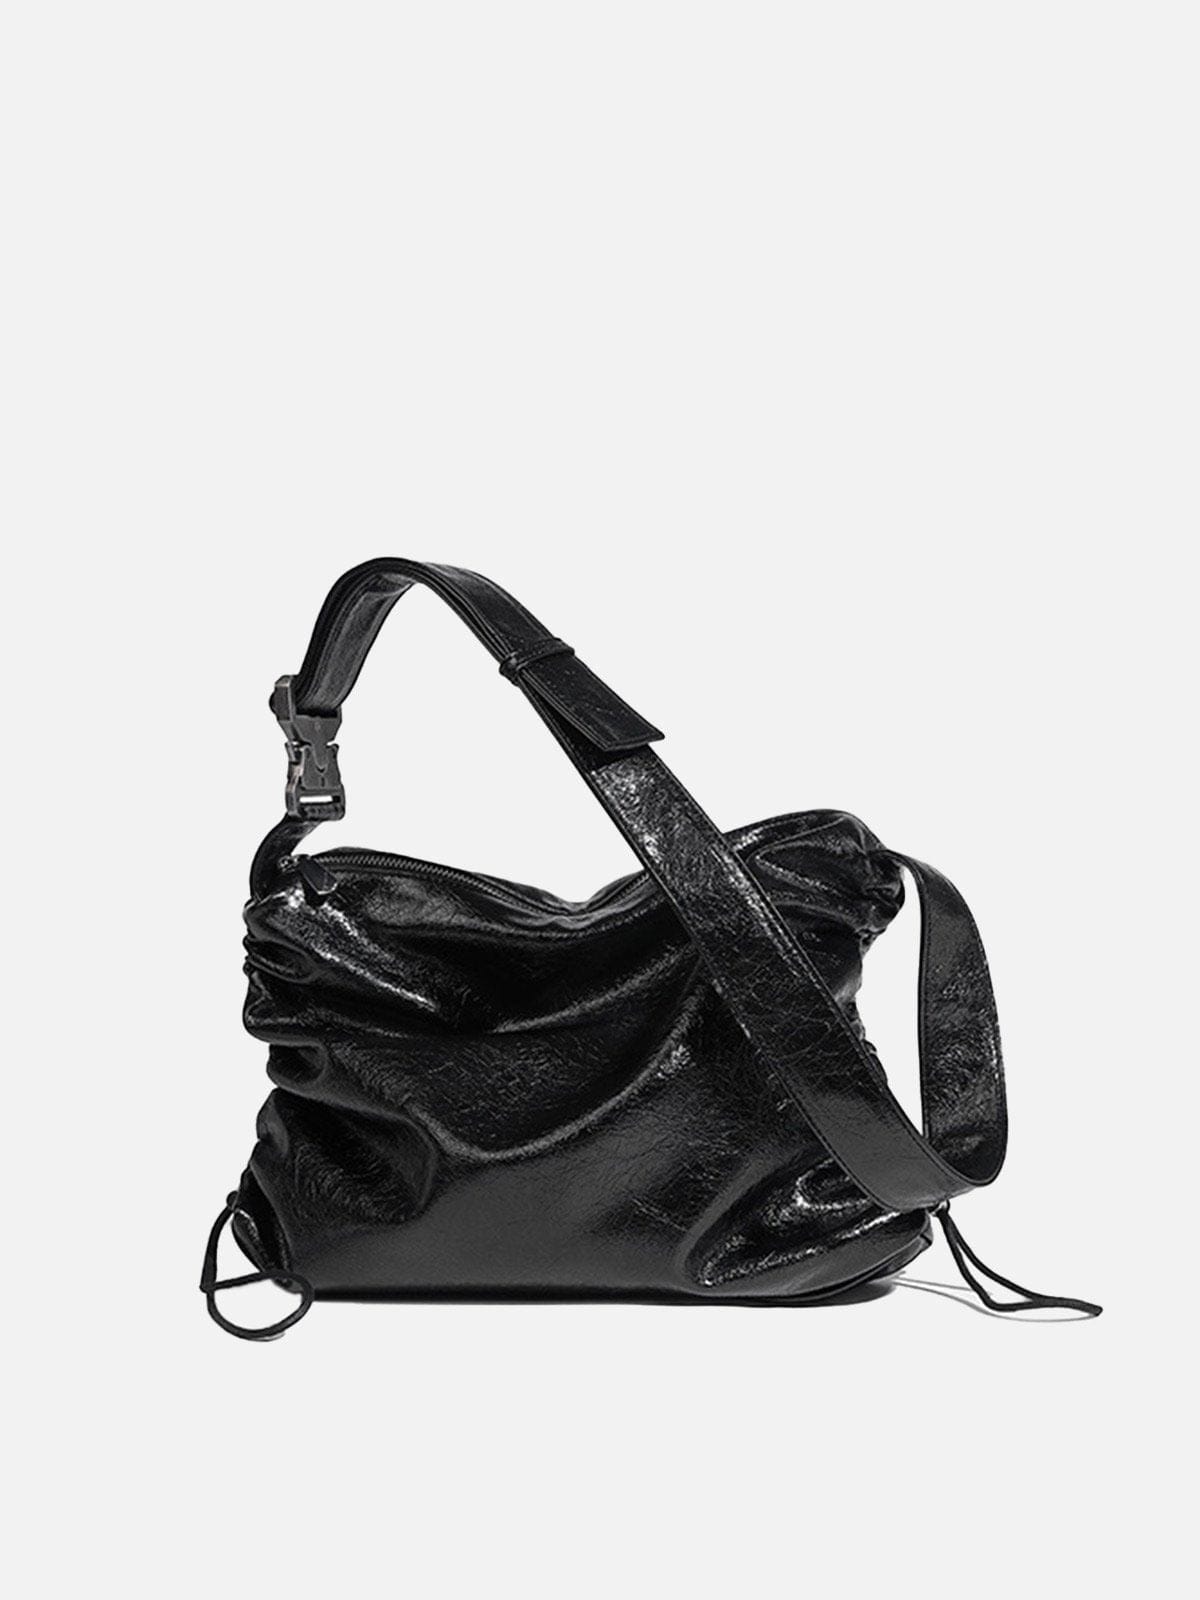 NEV Wrinkle Drawstring Bag